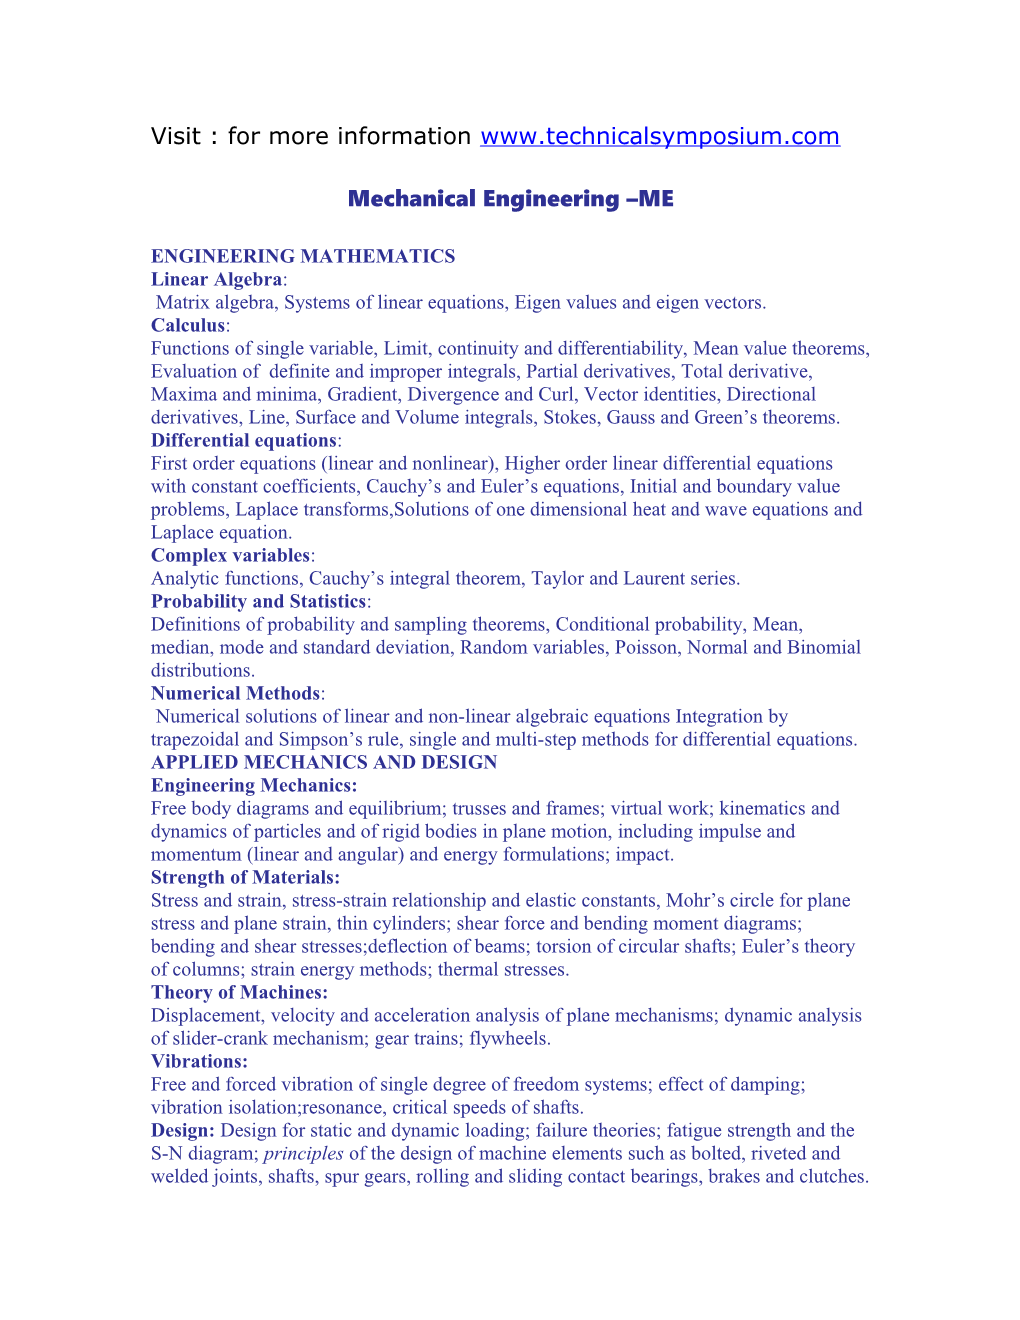 Mechanical Engineering ME